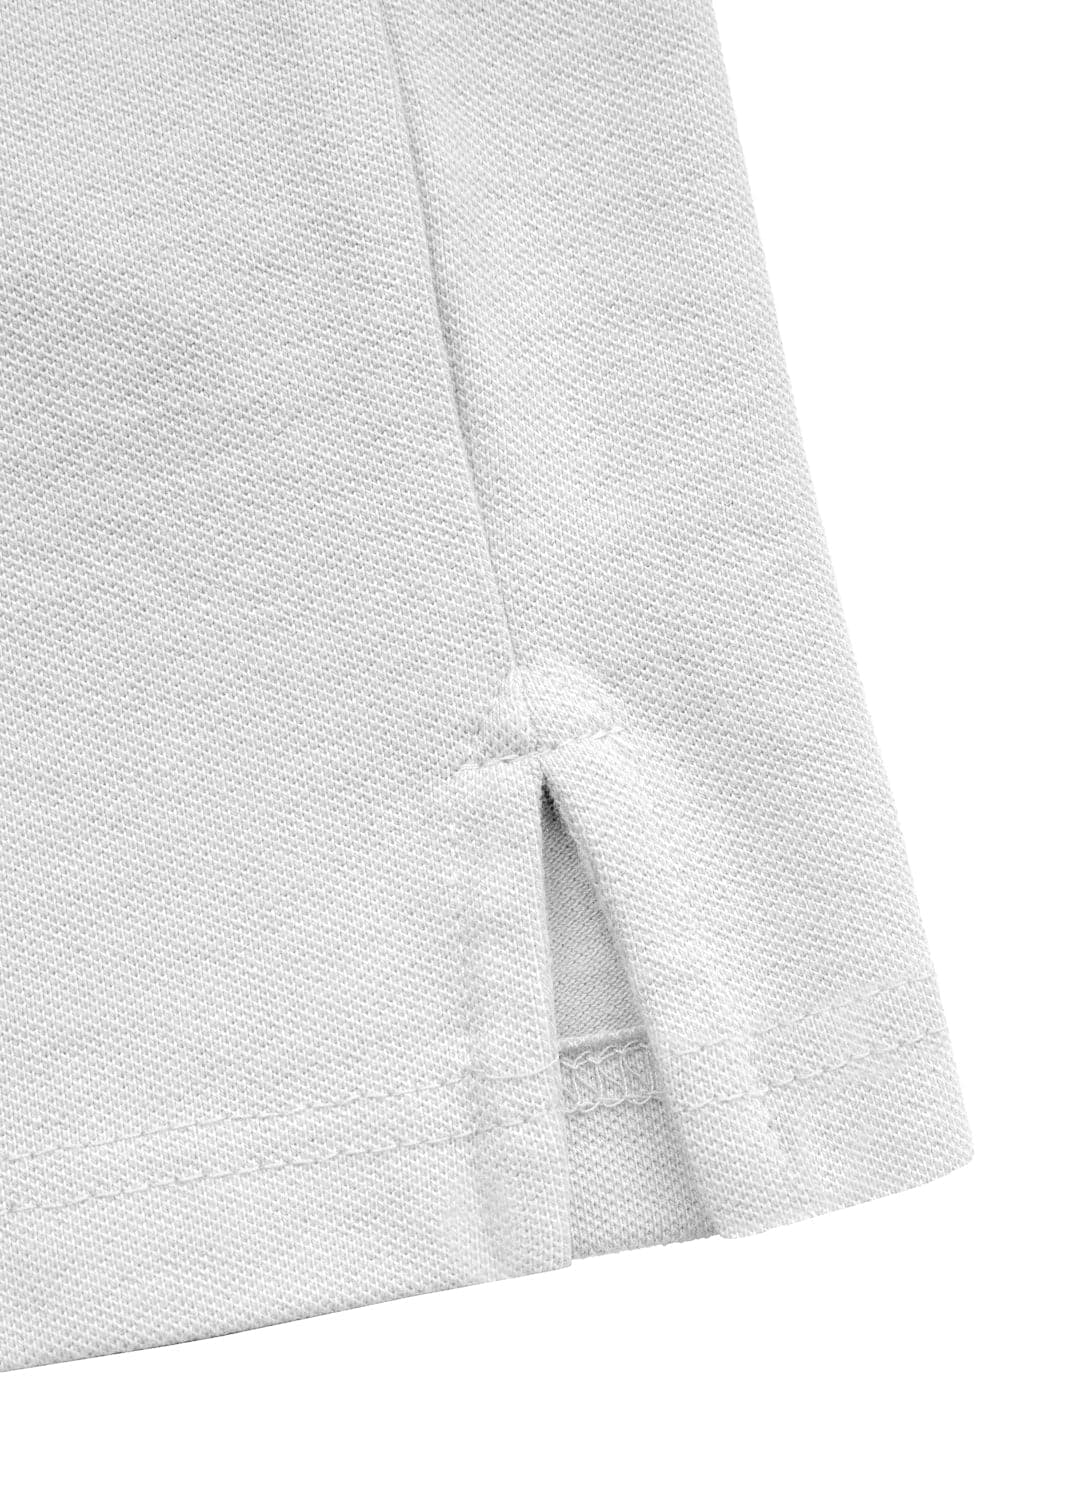 POLO REGULAR STRIPES Spandex White T-shirt.